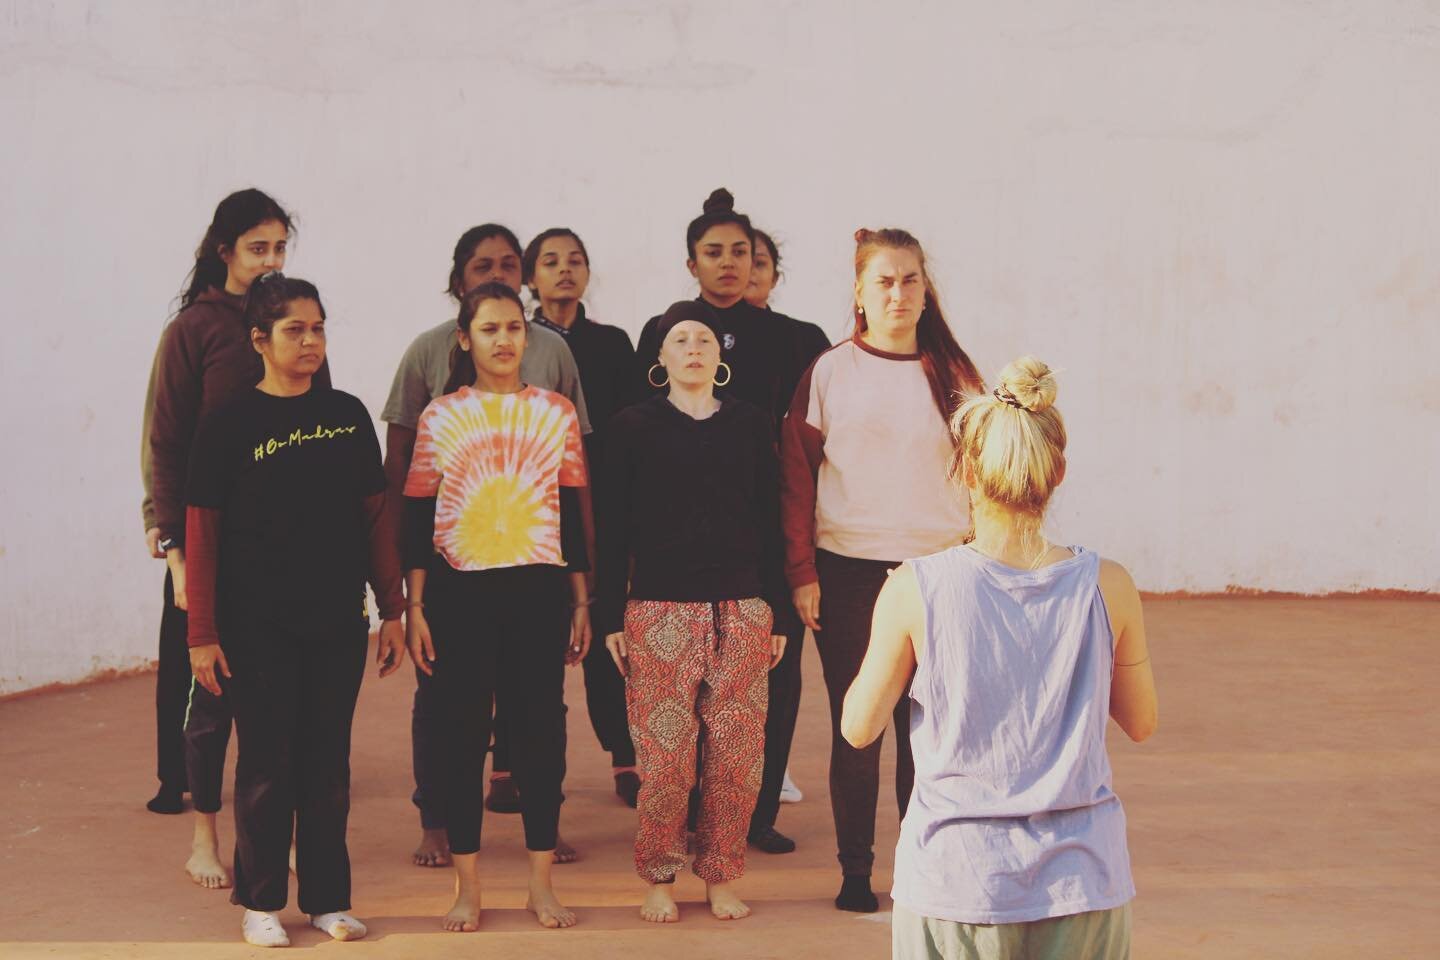 Abhyaasa Dance Arts Retreat in Jaipur. @vinyasathedanceashram 

@brigittebreternitz

#BUDYflow

#danceartsretreat #india #rajasthan #dancers #education #arts #artists #yogadancefusion #movementart #communitxaylife #dancecommunityindia #choreographer 